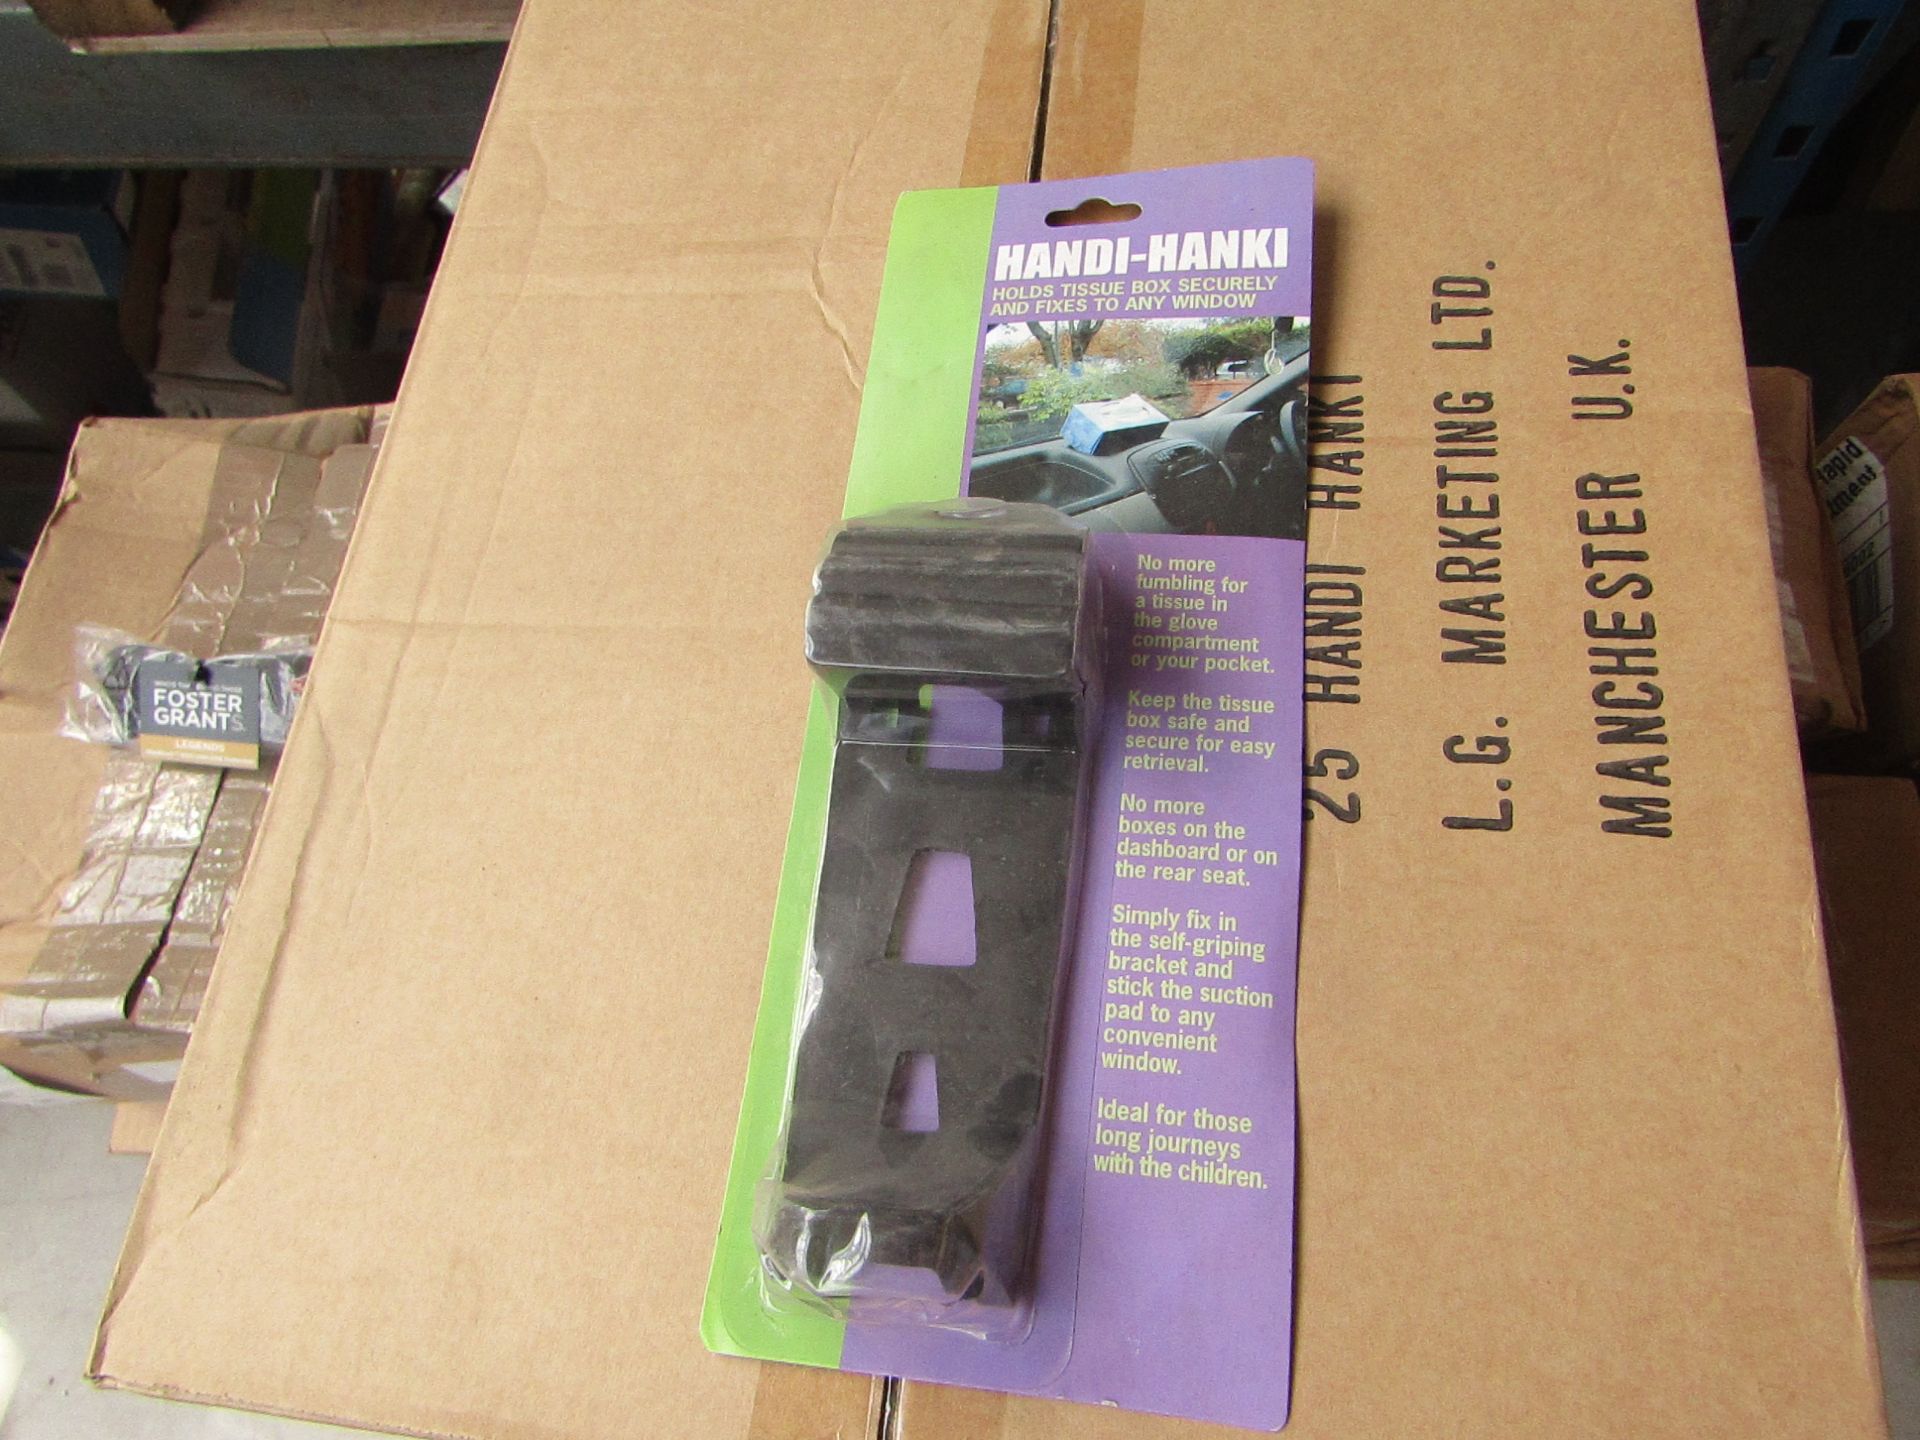 1X BOX OF 25 Handi-Hanki - Sticks Tissue Box To Any Window. - Unused & Packaged.